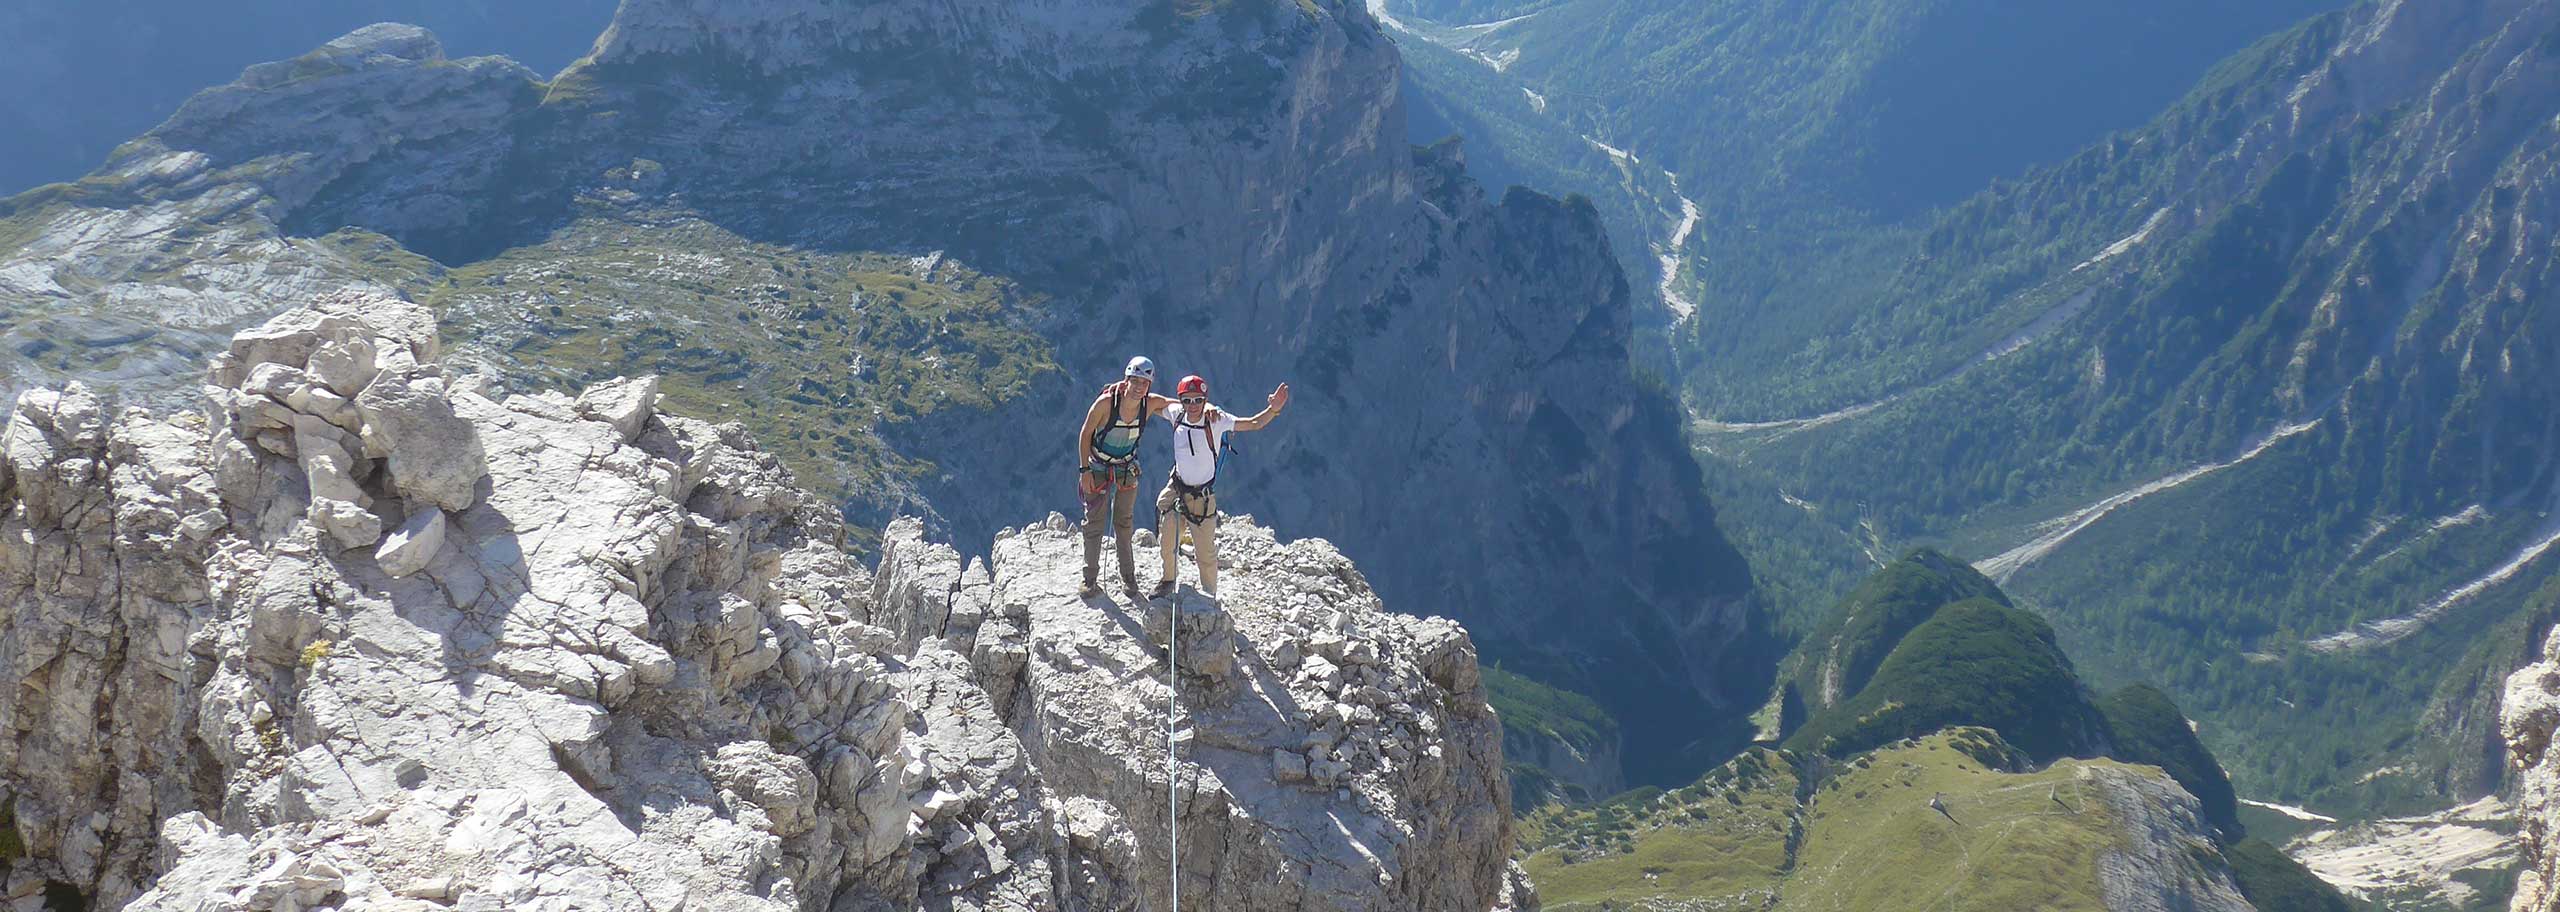 Climbing with a Mountain Guide in Val di Zoldo